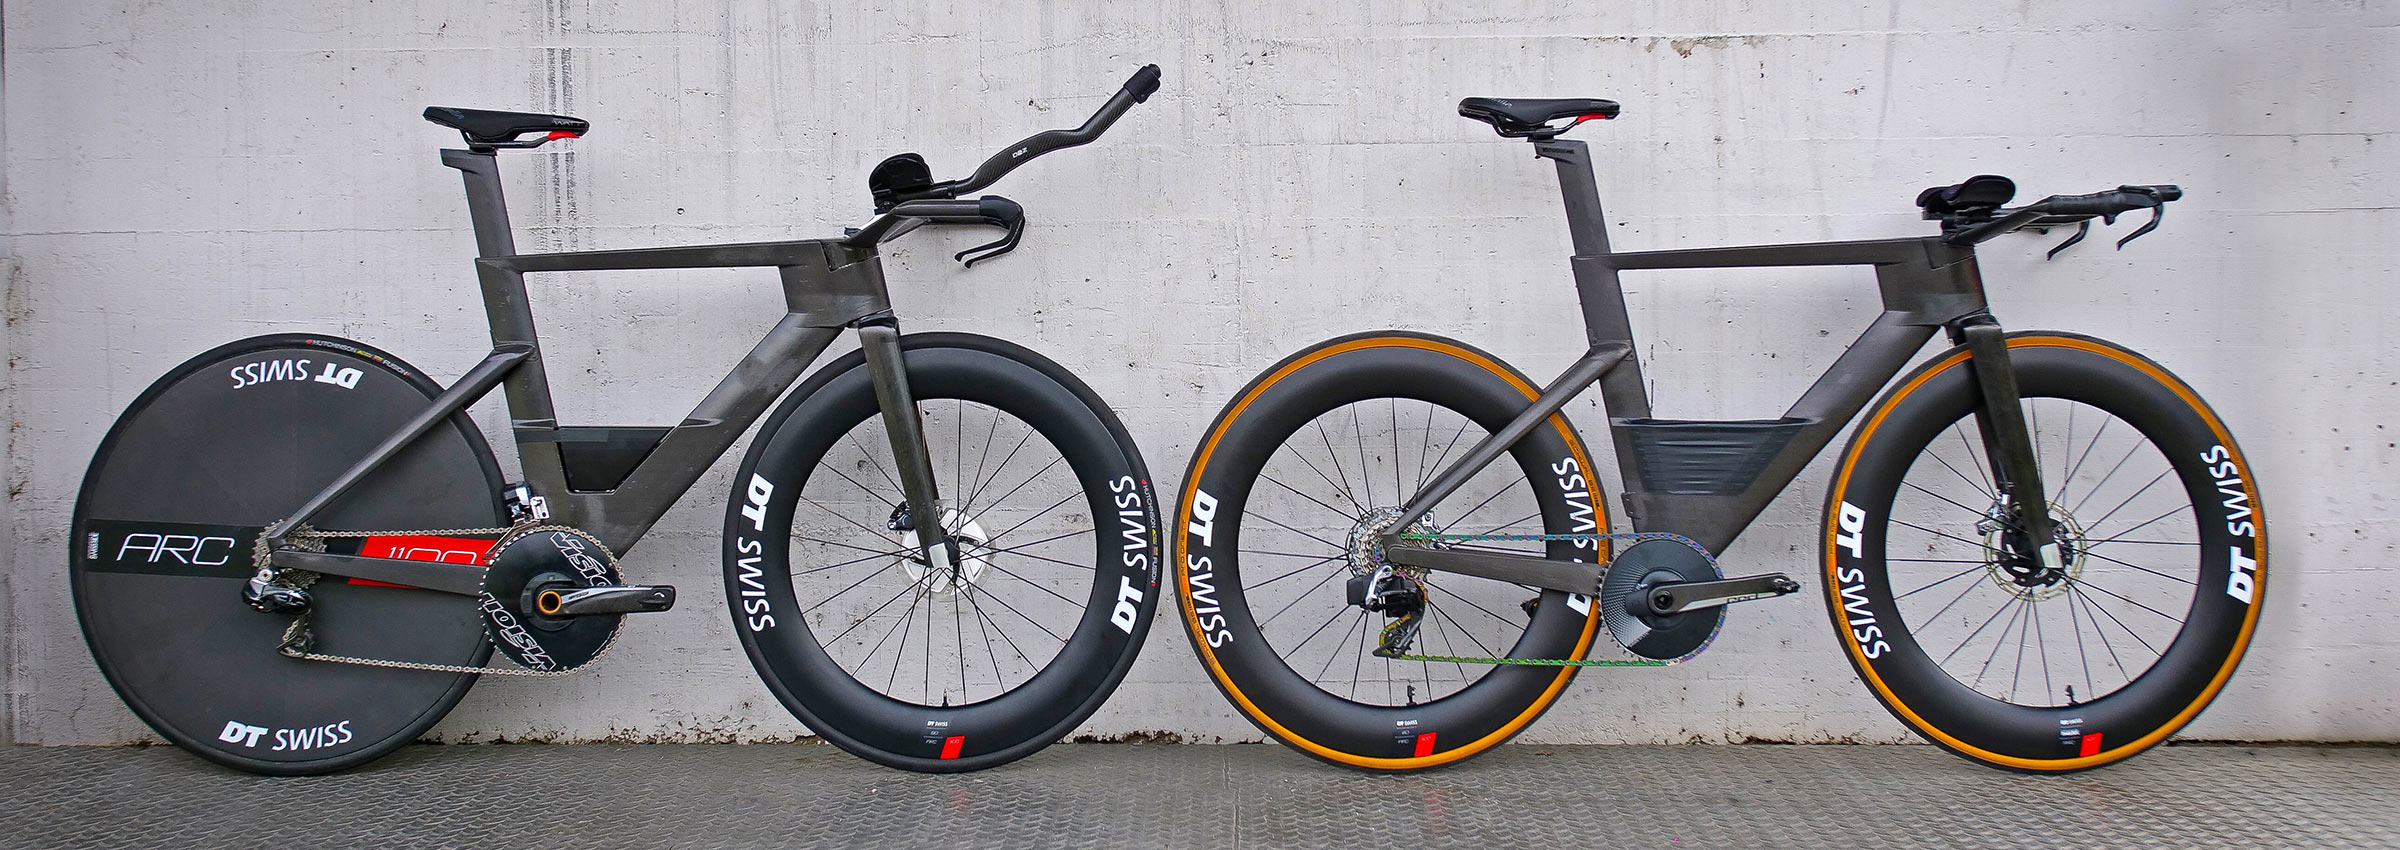 BMC Red Bull Speedmachine prototype, Worlds Fastest Race Bike time trial triathlon fit options